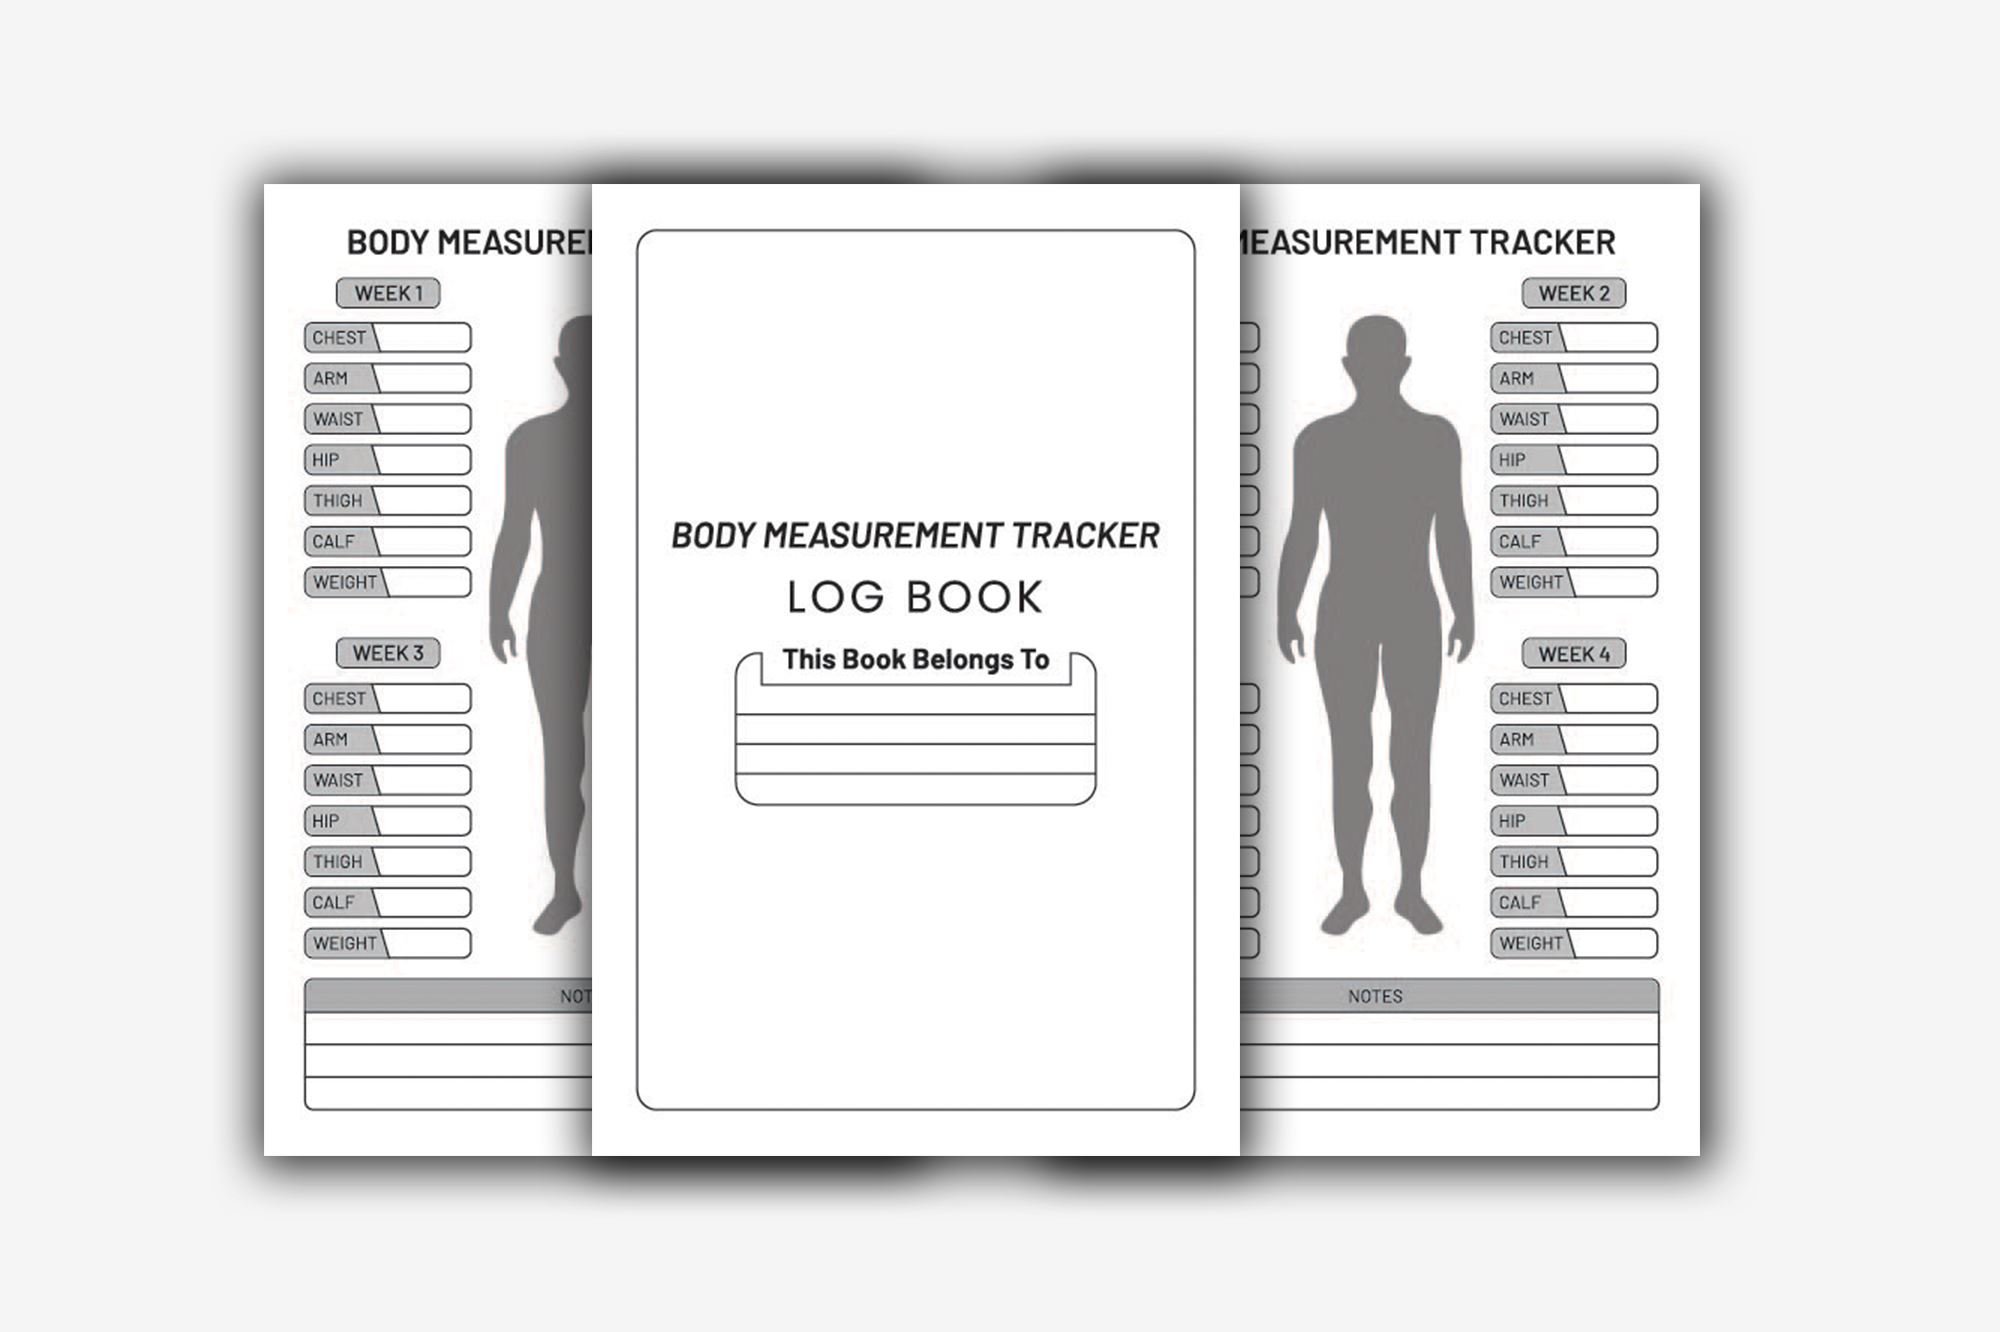 The body measurement tracker log book.